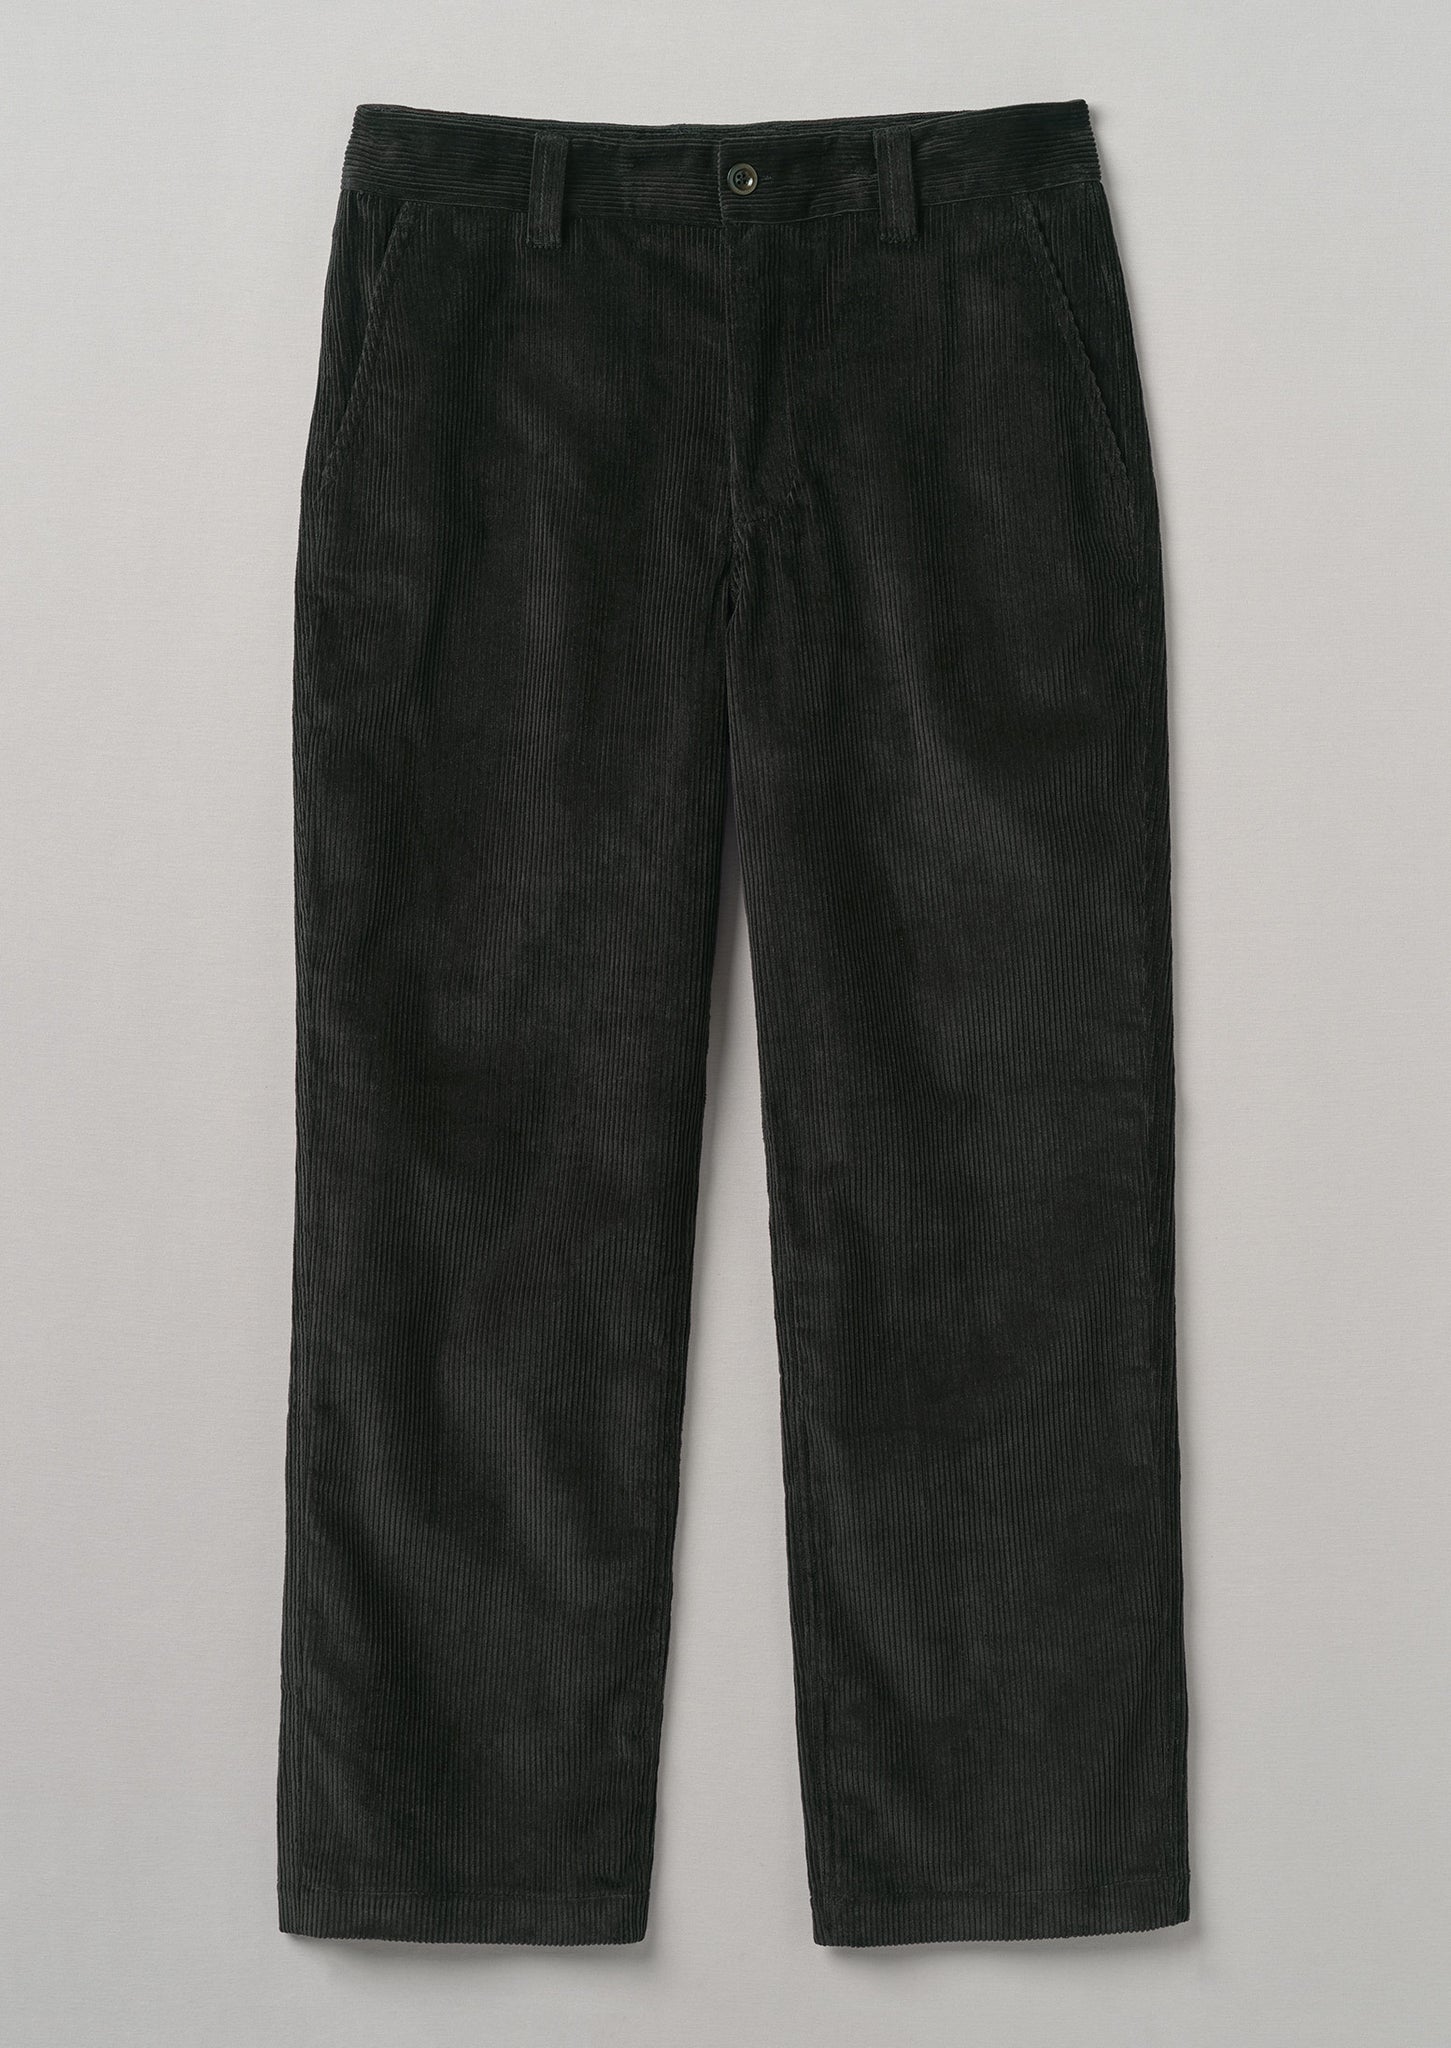 Vintage Men Corduroy Pants Trousers Slacks Straight Leg Casual Formal  Workwear | eBay